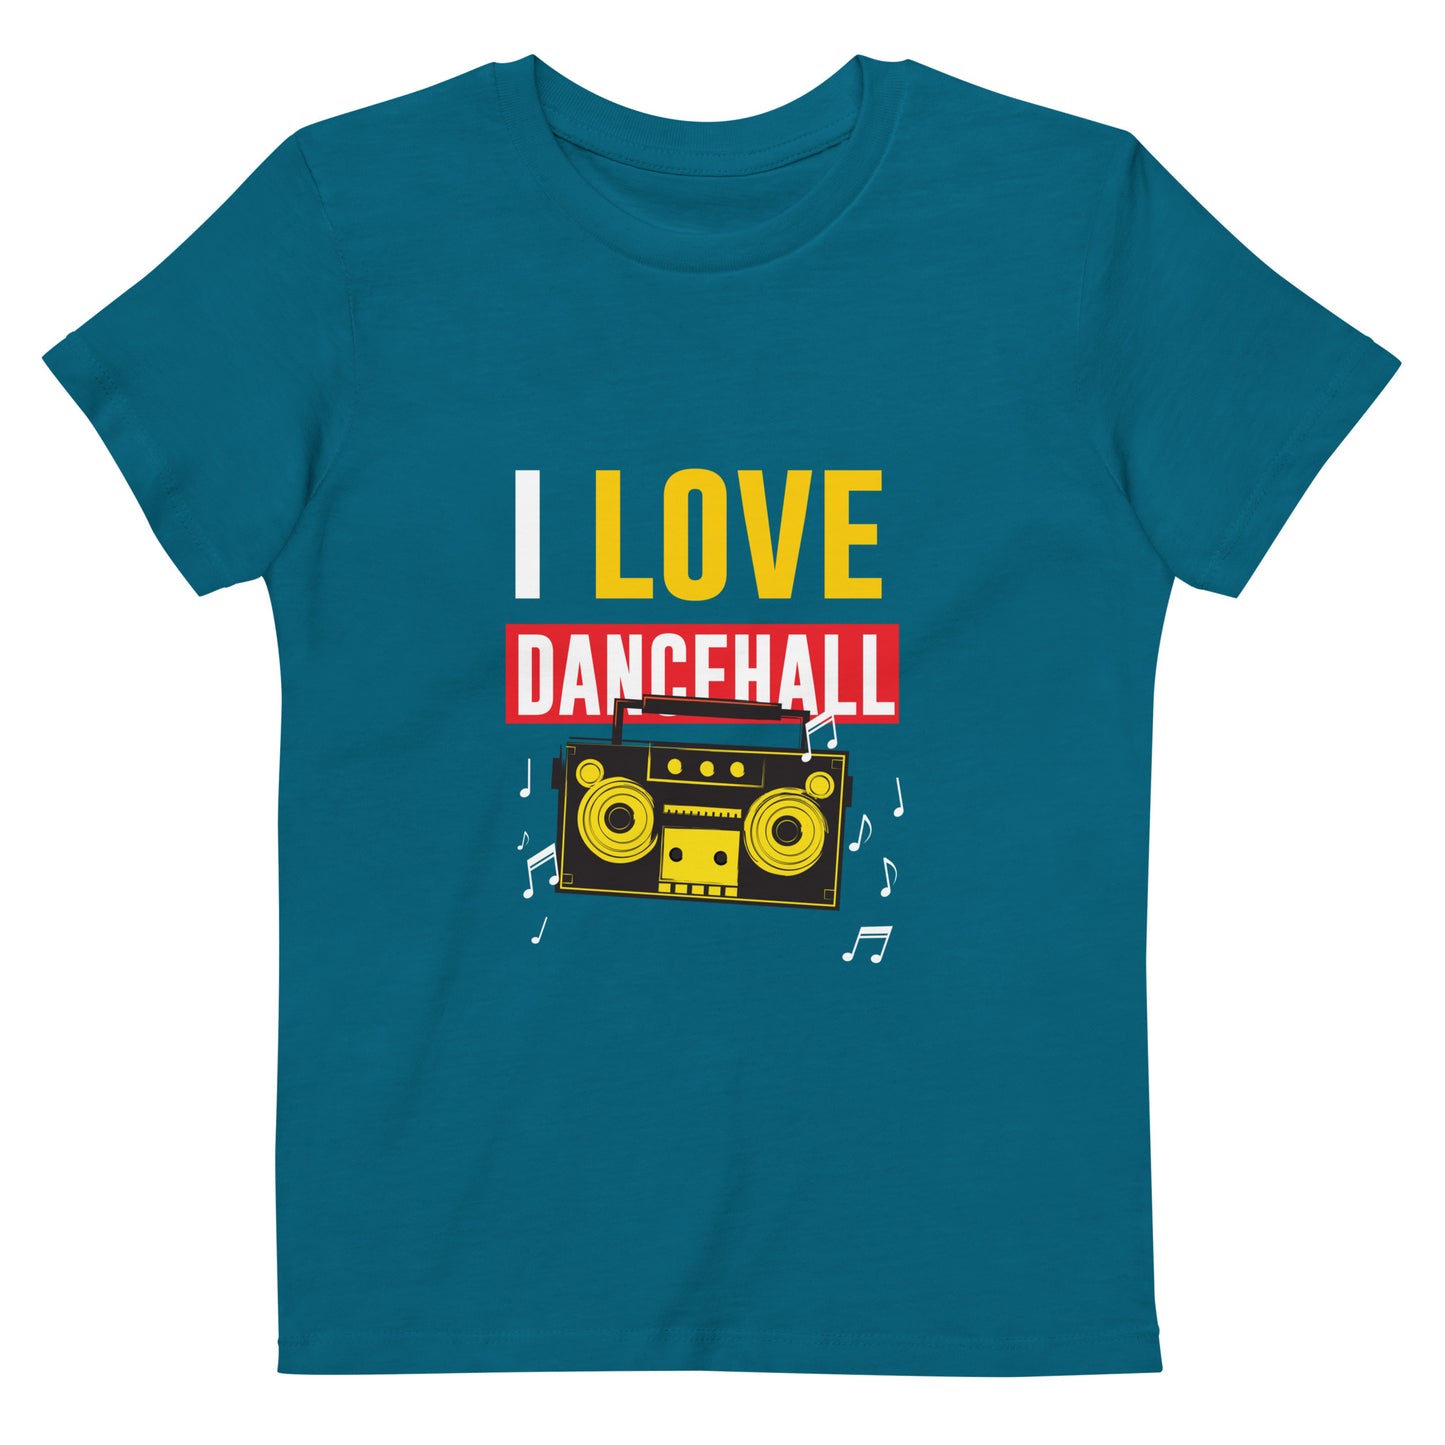 Organic cotton kids "I Love Dancehall" t-shirt